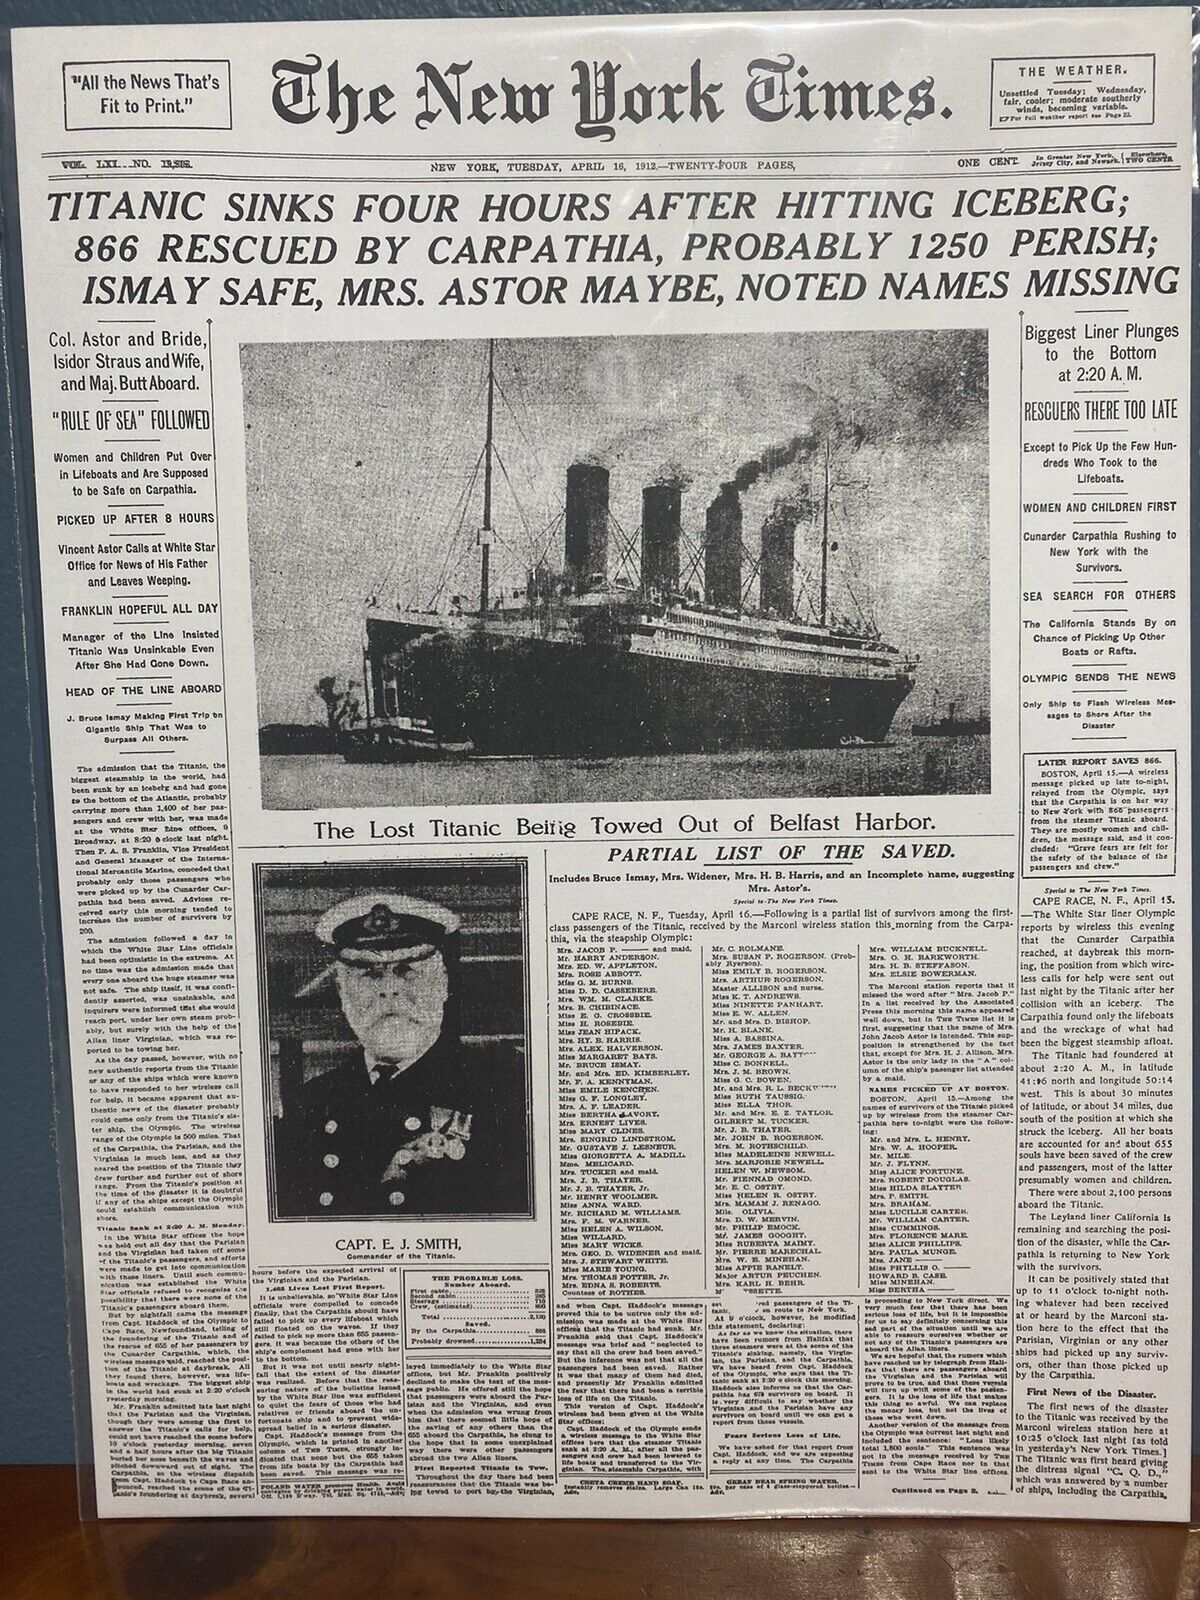 VINTAGE NEWSPAPER HEADLINE ~TITANIC SINKS CAPTAIN E.J. SMITH HITS ICEBERG 1912